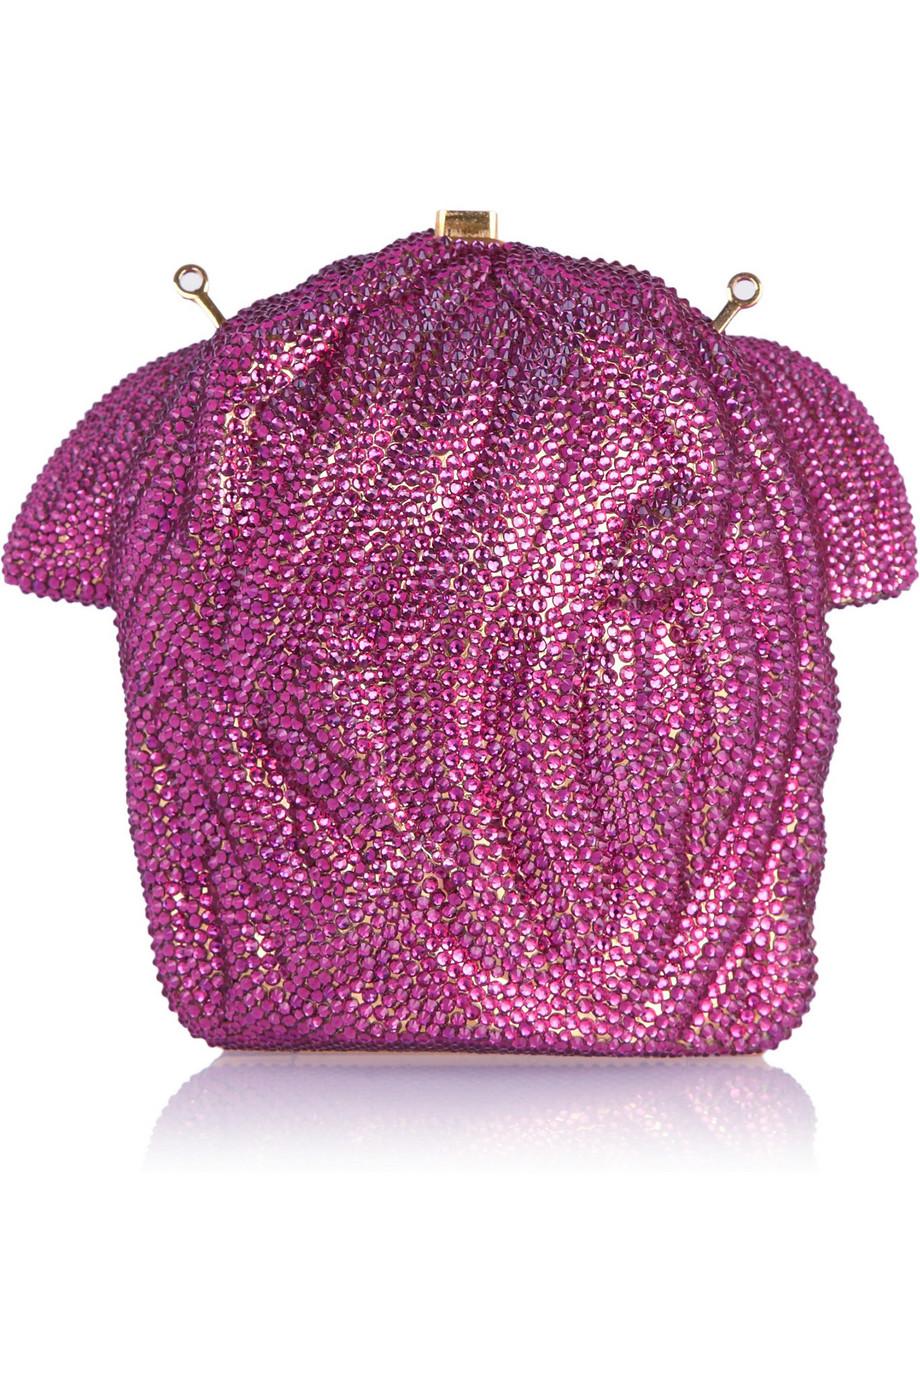 versace sparkly bag